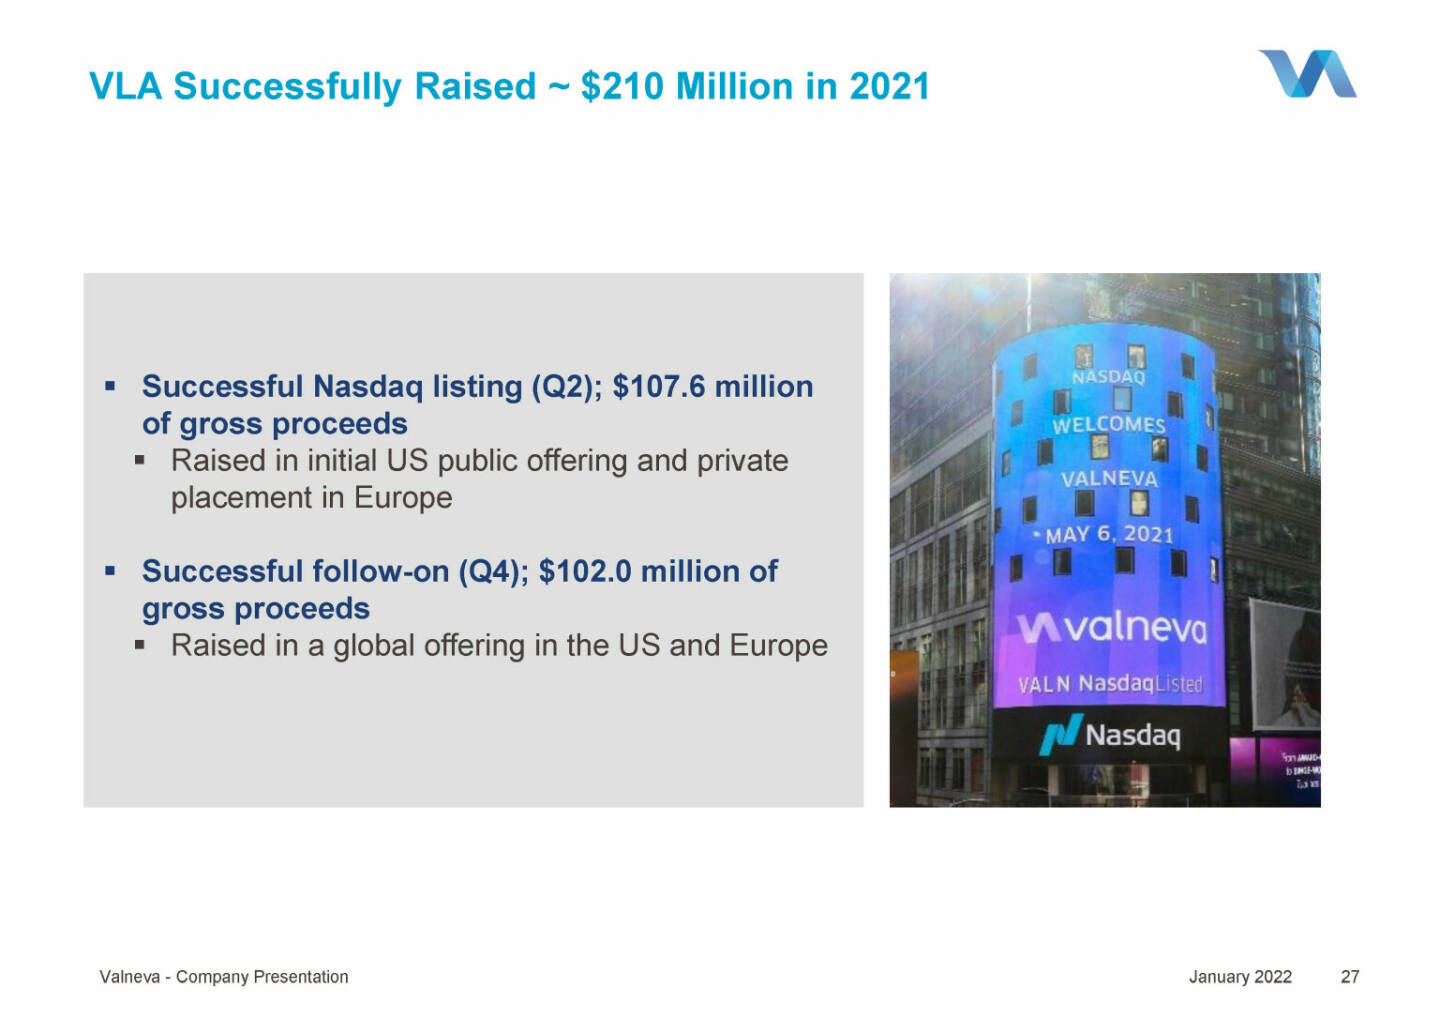 Valneva - VLA Successfully Raised ~ $210 Million in 2021